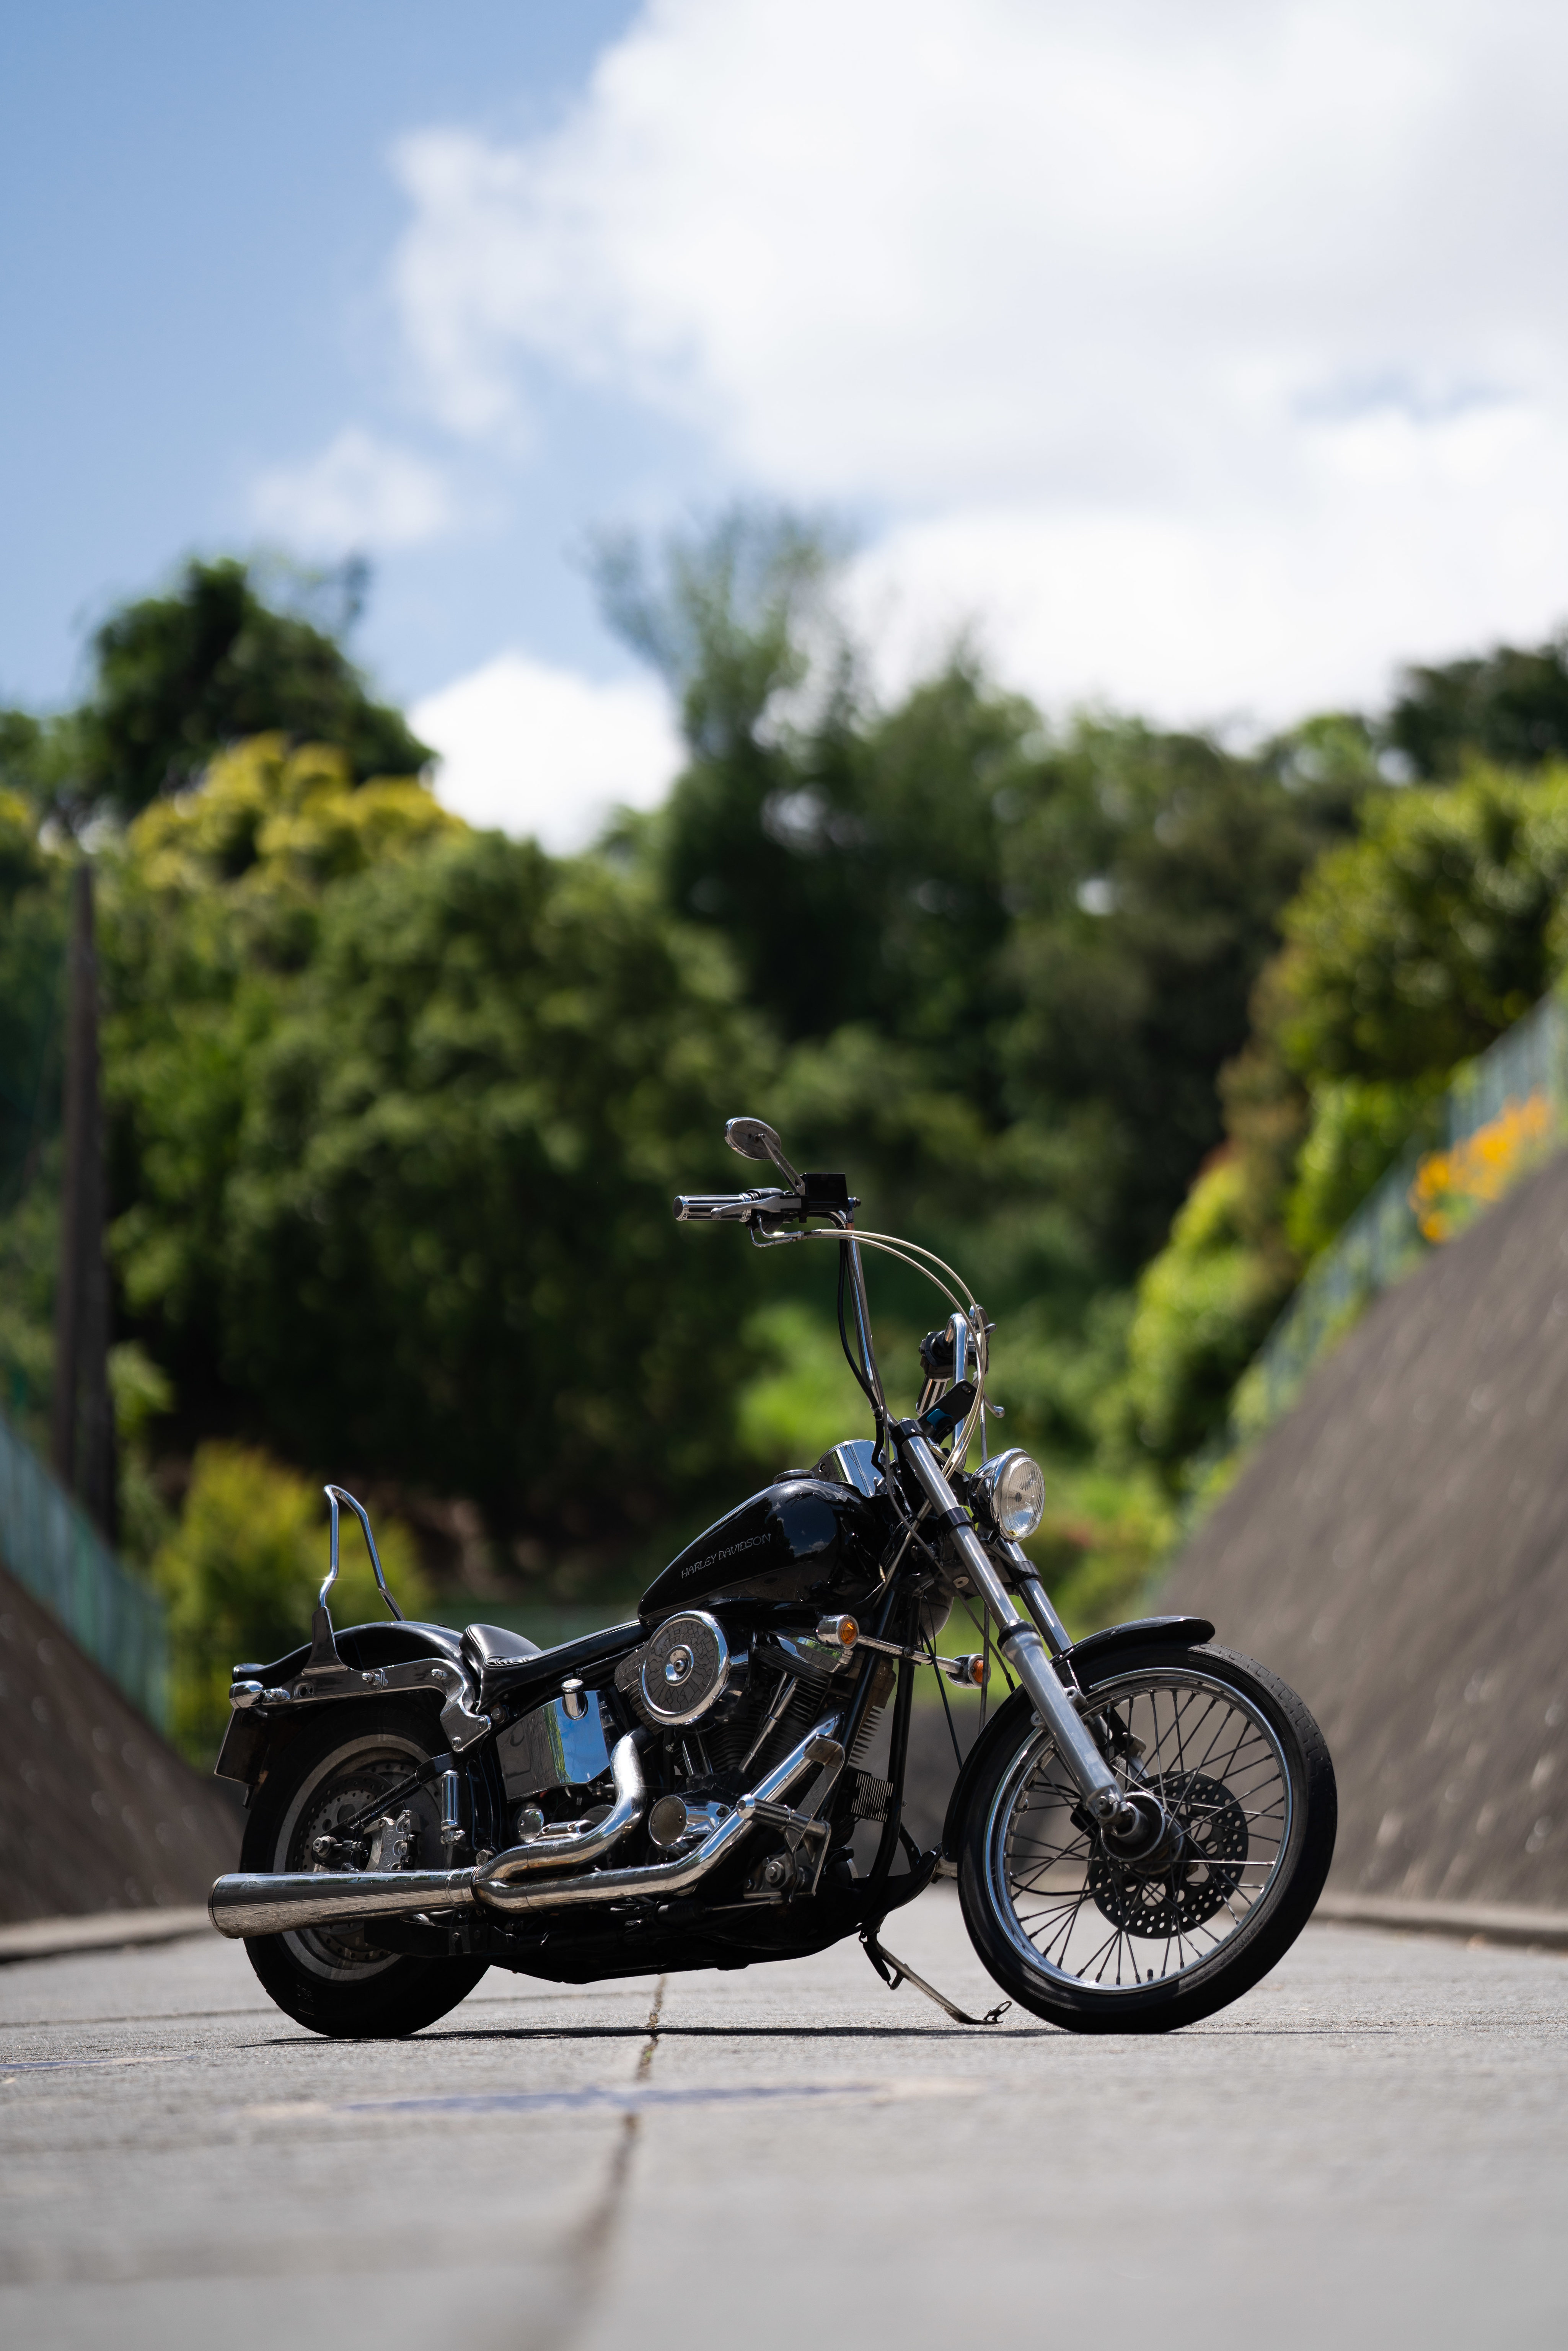 Cool HD Wallpaper motorcycle, motorcycles, side view, bike